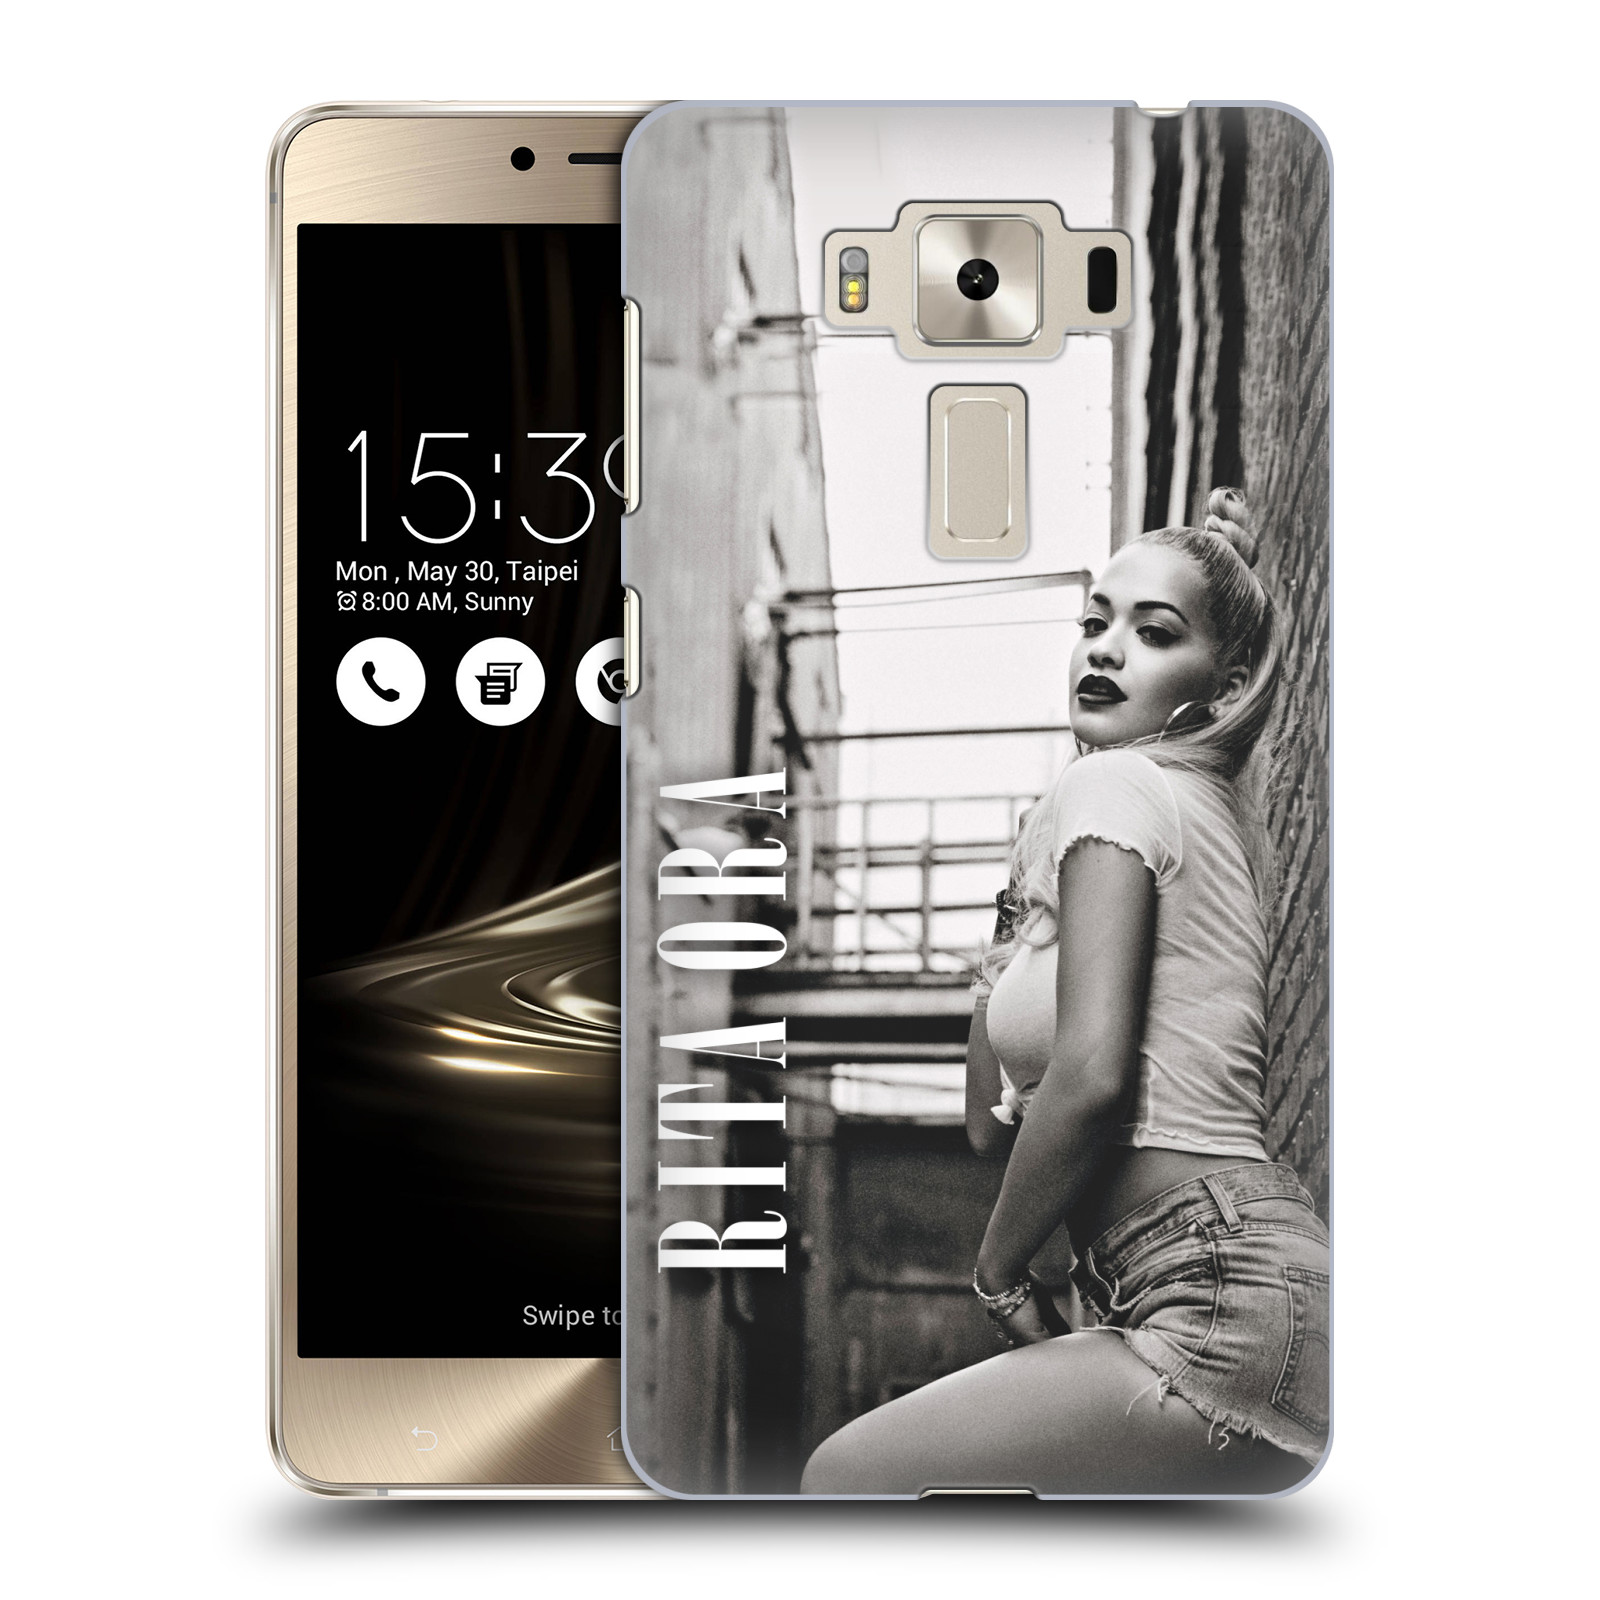 HEAD CASE plastový obal na mobil Asus Zenfone 3 DELUXE ZS550KL zpěvačka Rita Ora foto černobílá